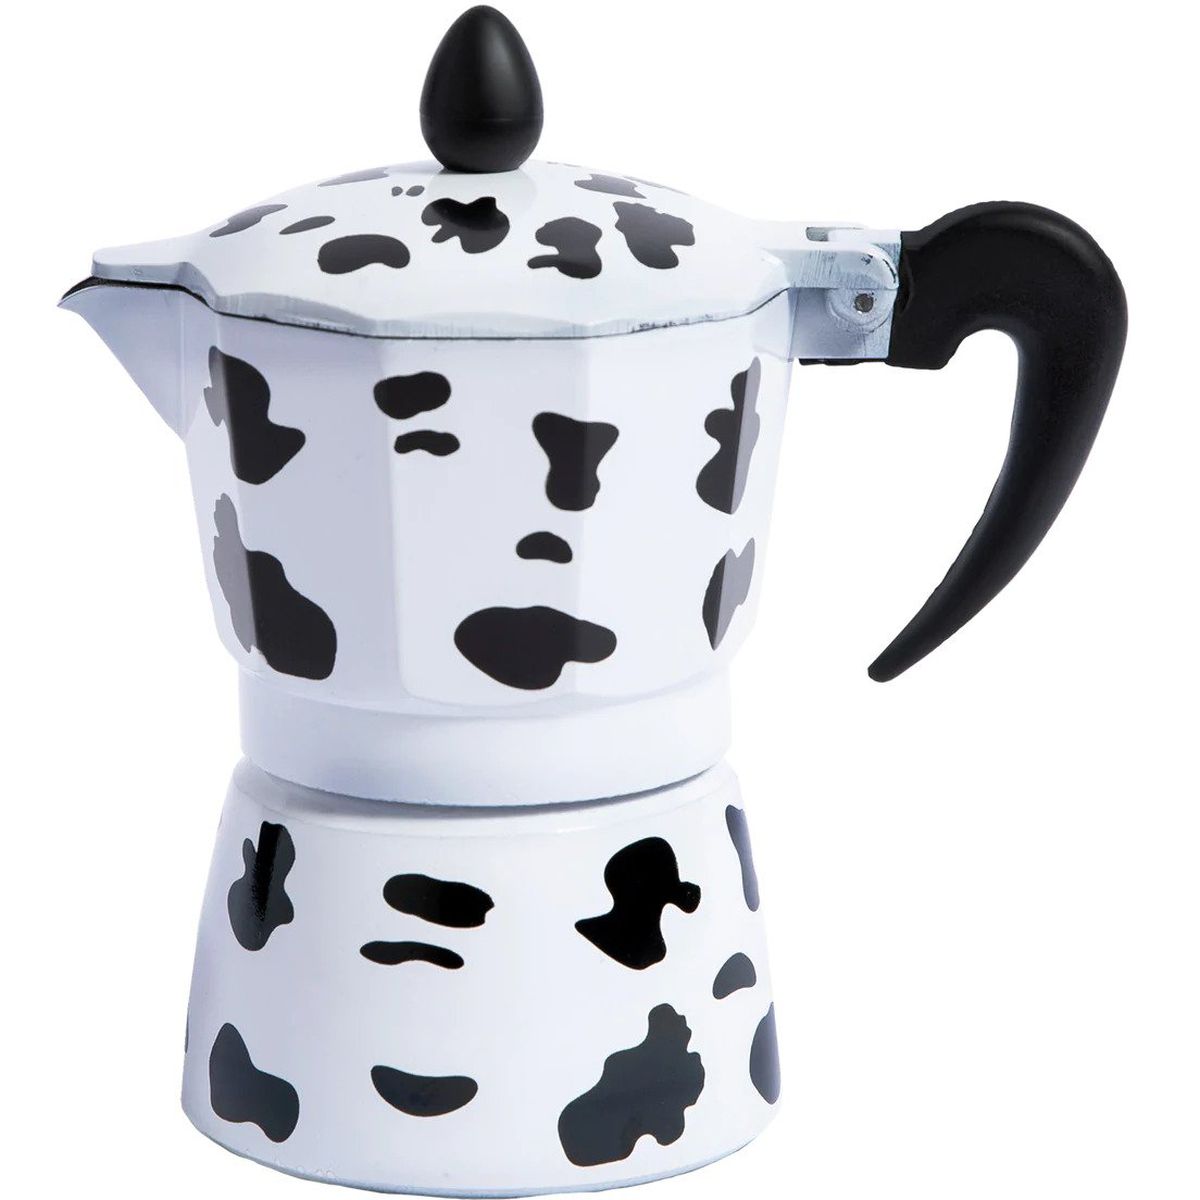 A mocha pot with a cow-print pattern